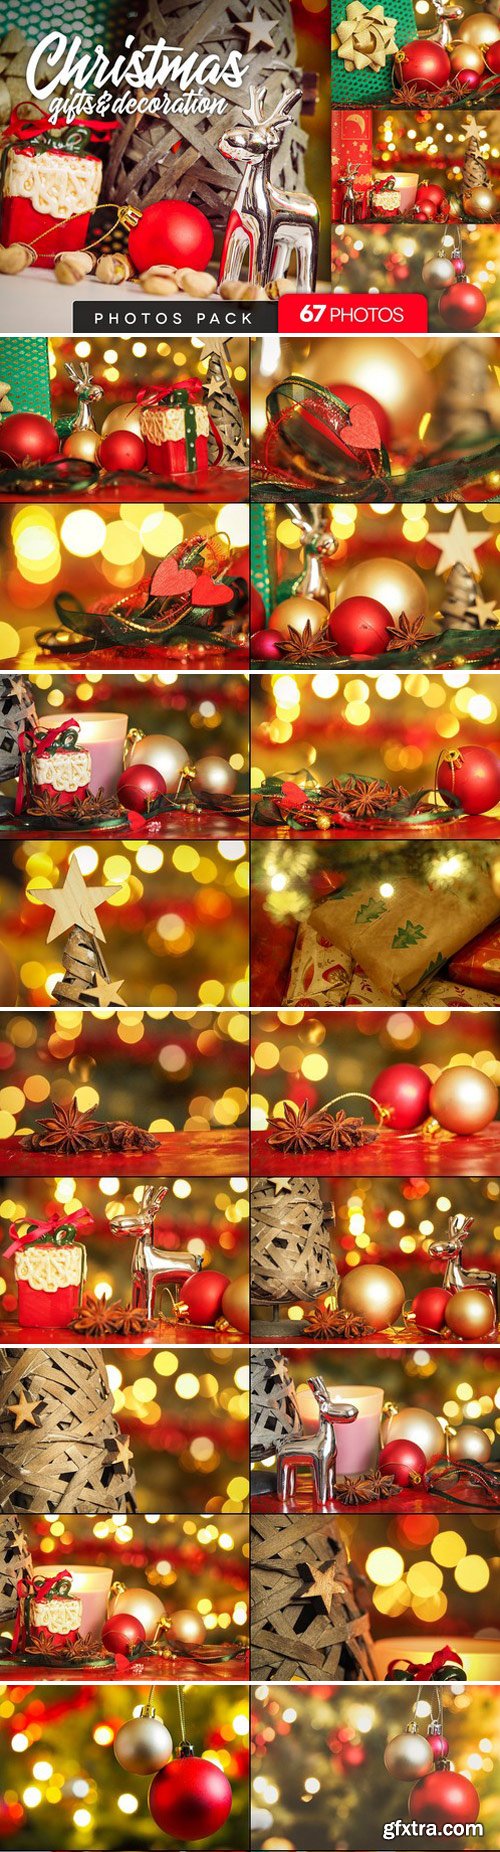 CM - Christmas gifts & decoration /67pics 2041709